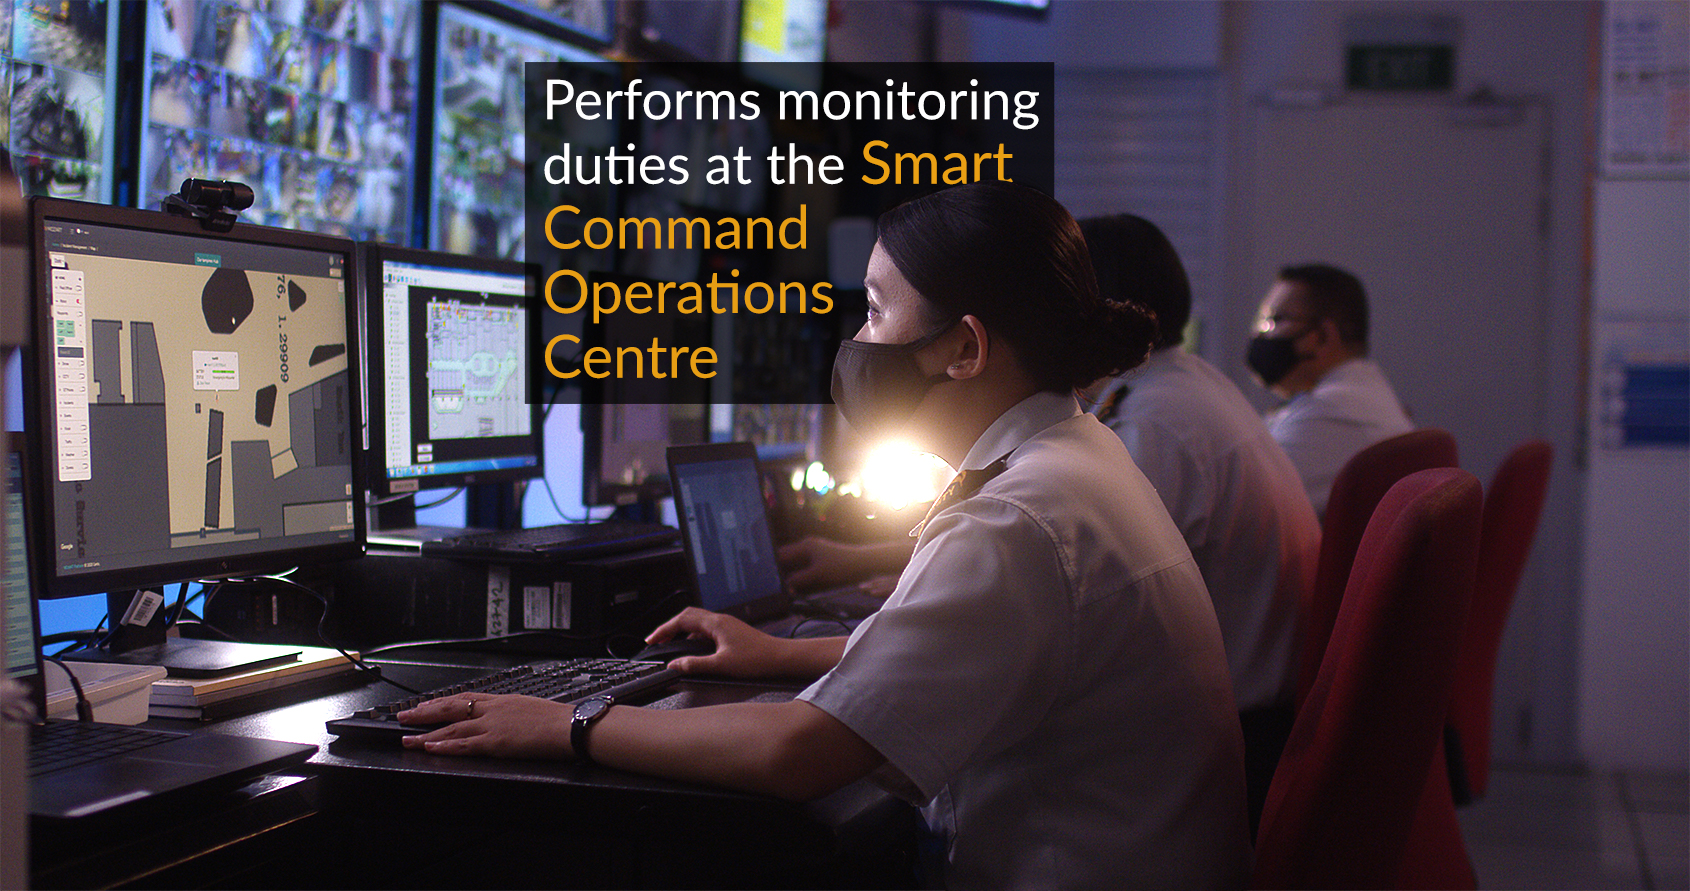 Certis Smart Command Operations Centre